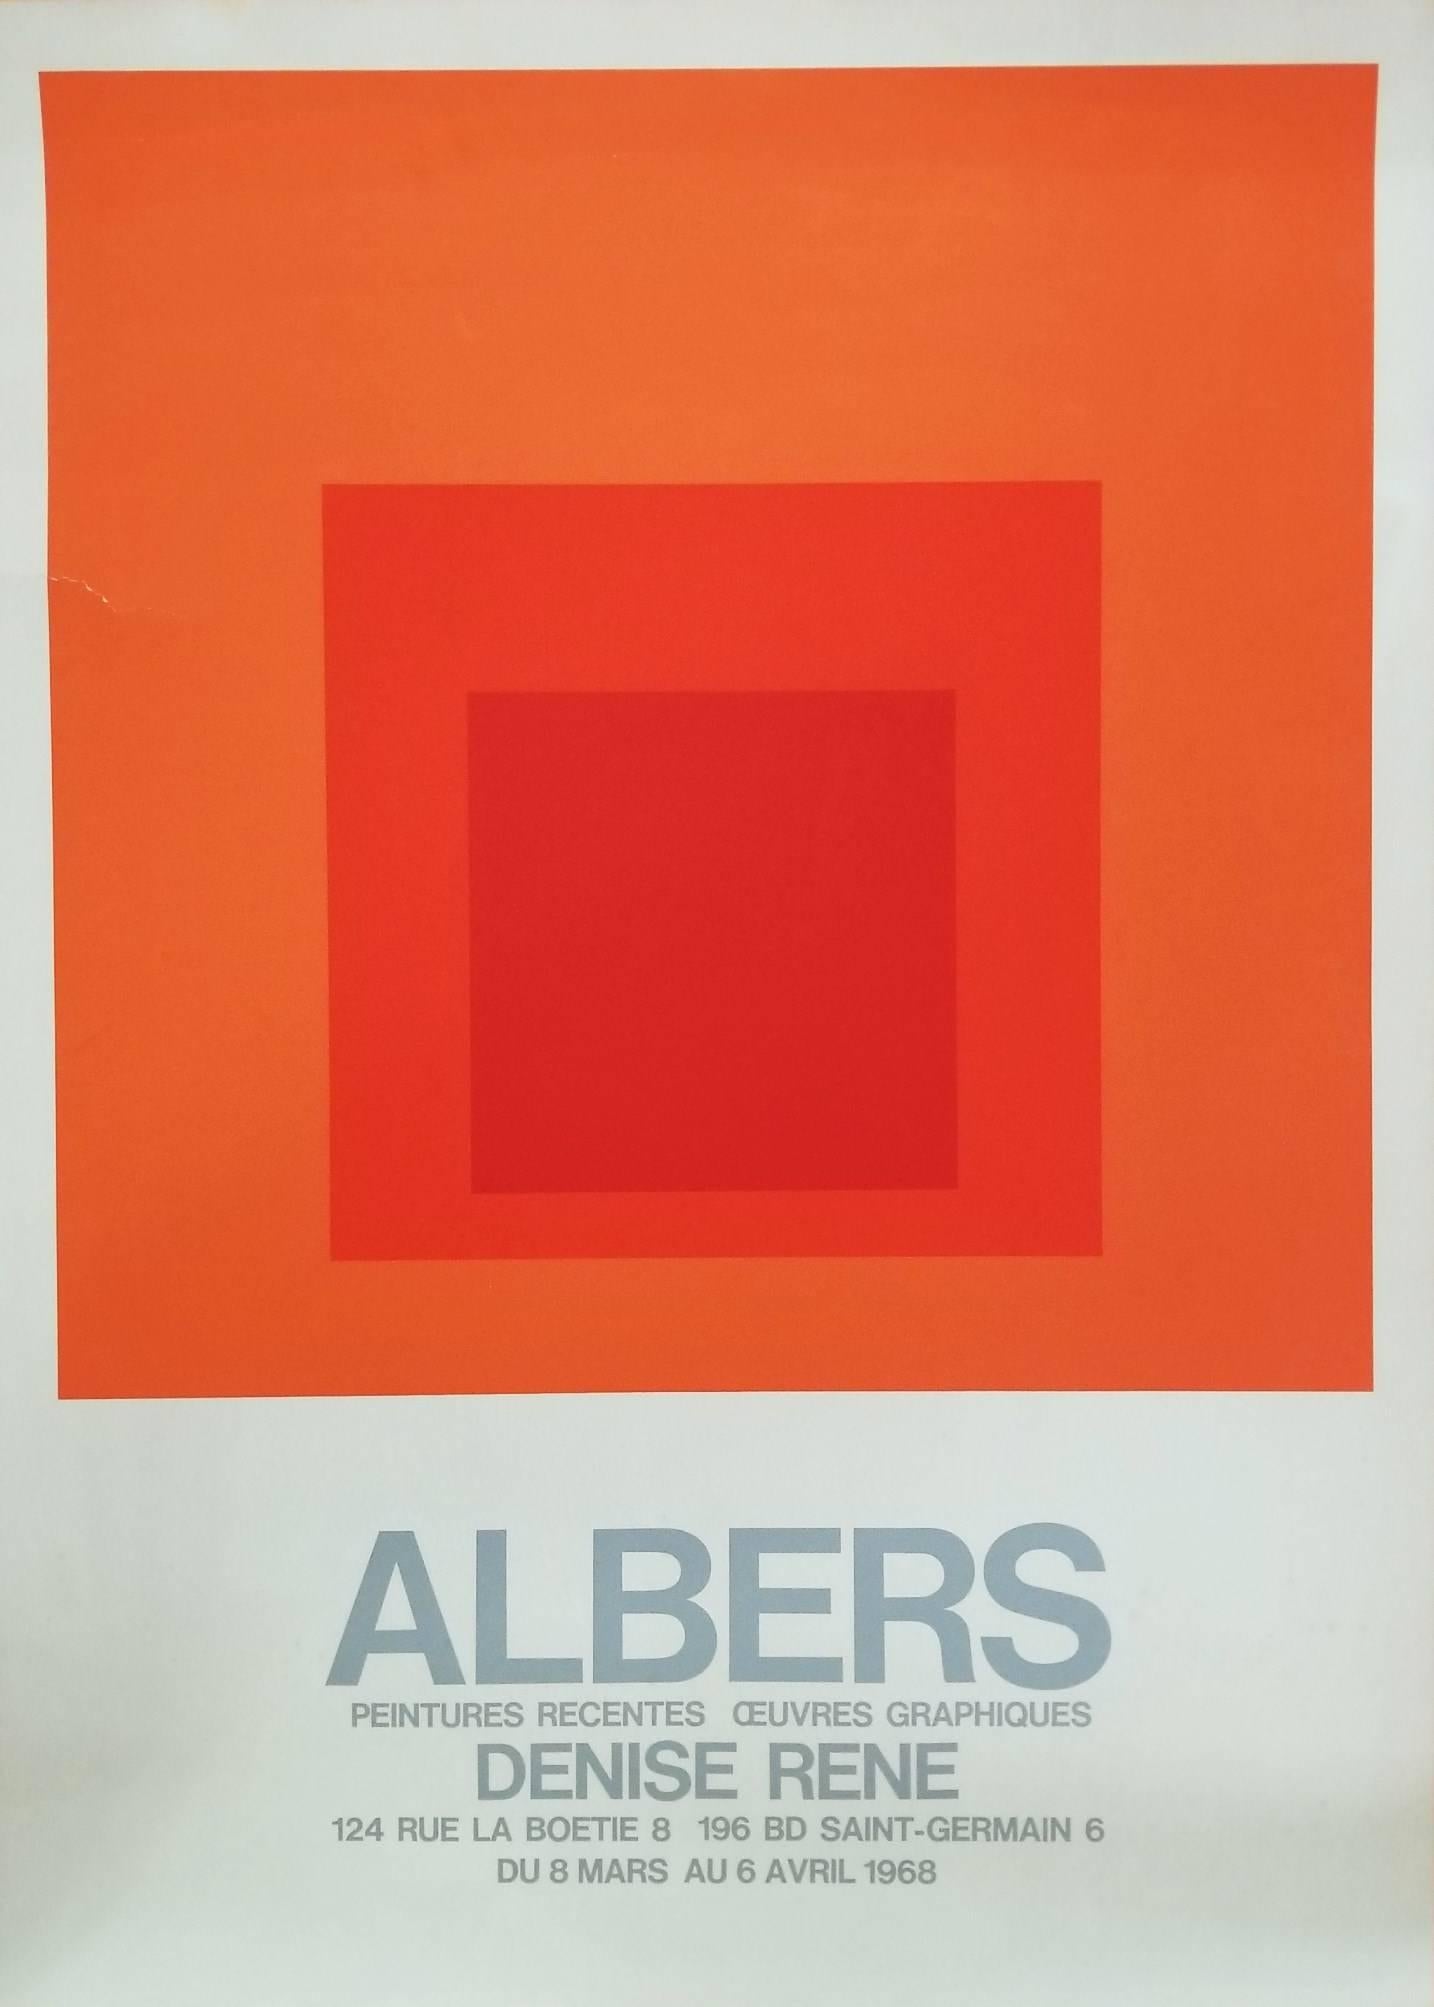 Josef Albers Abstract Print - Galerie Denise Rene